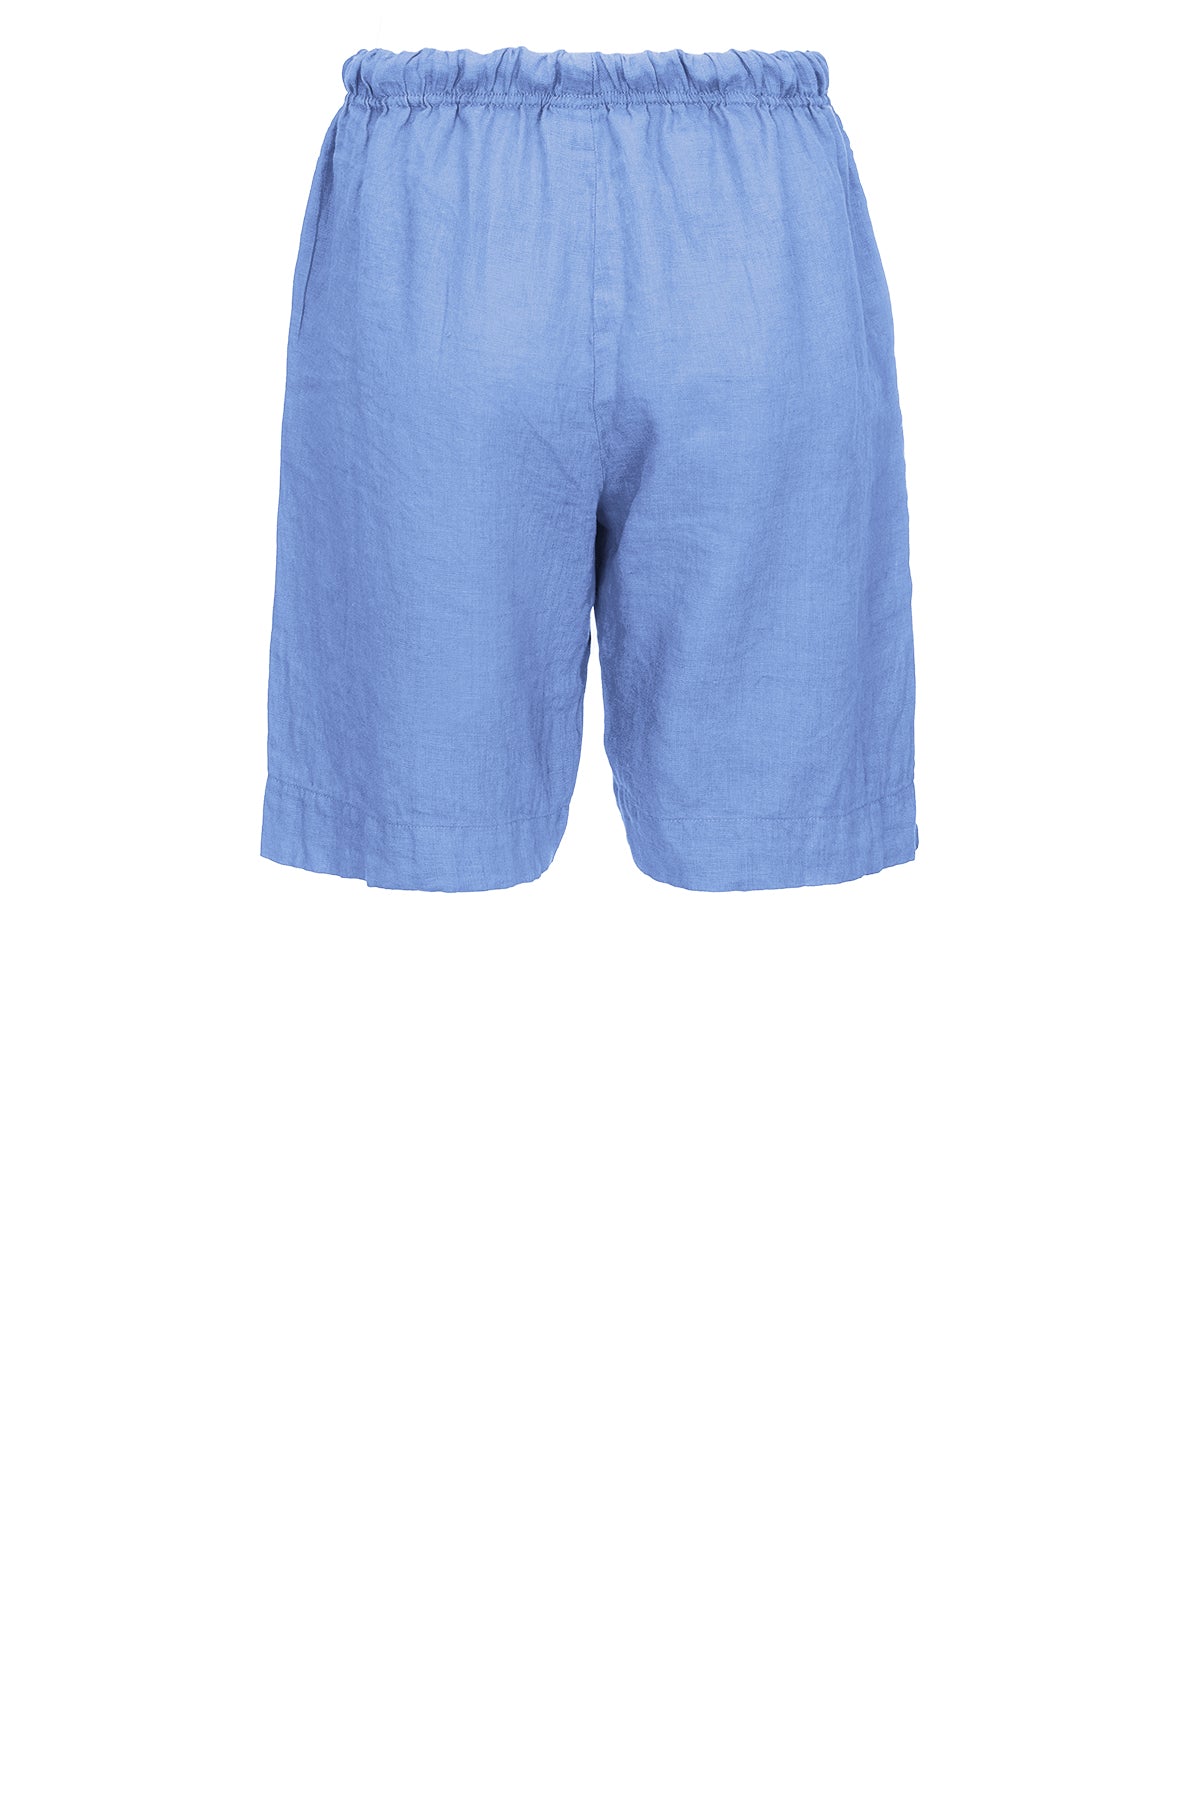 LUXZUZ // ONE TWO Lailai Shorts Shorts 553 Granada Sky